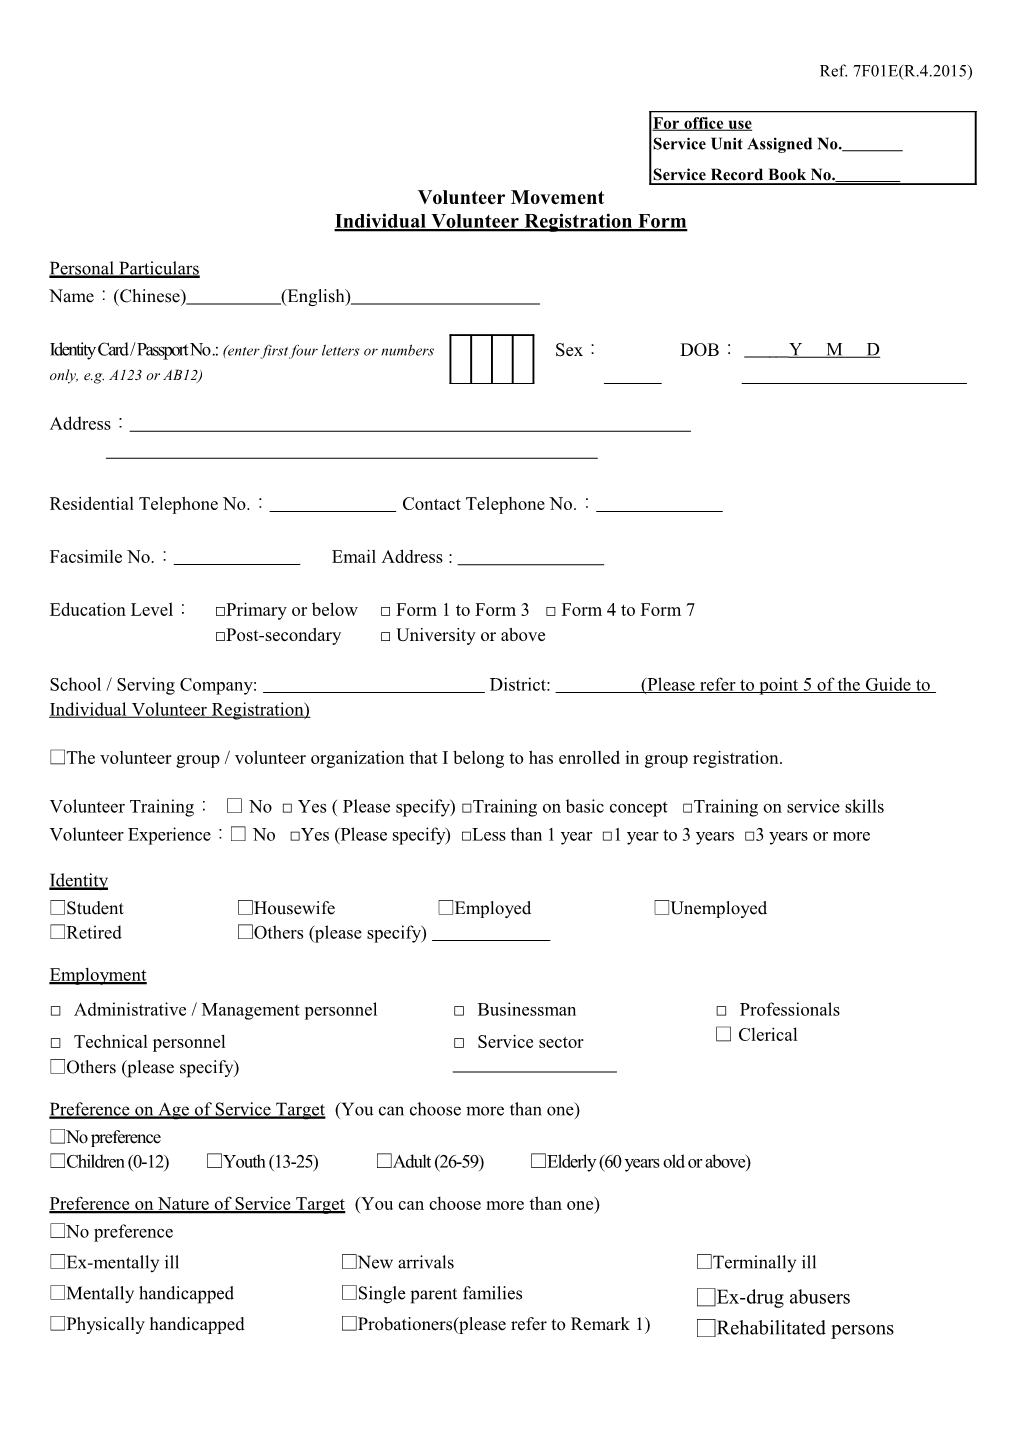 Individual Volunteer Registration Form